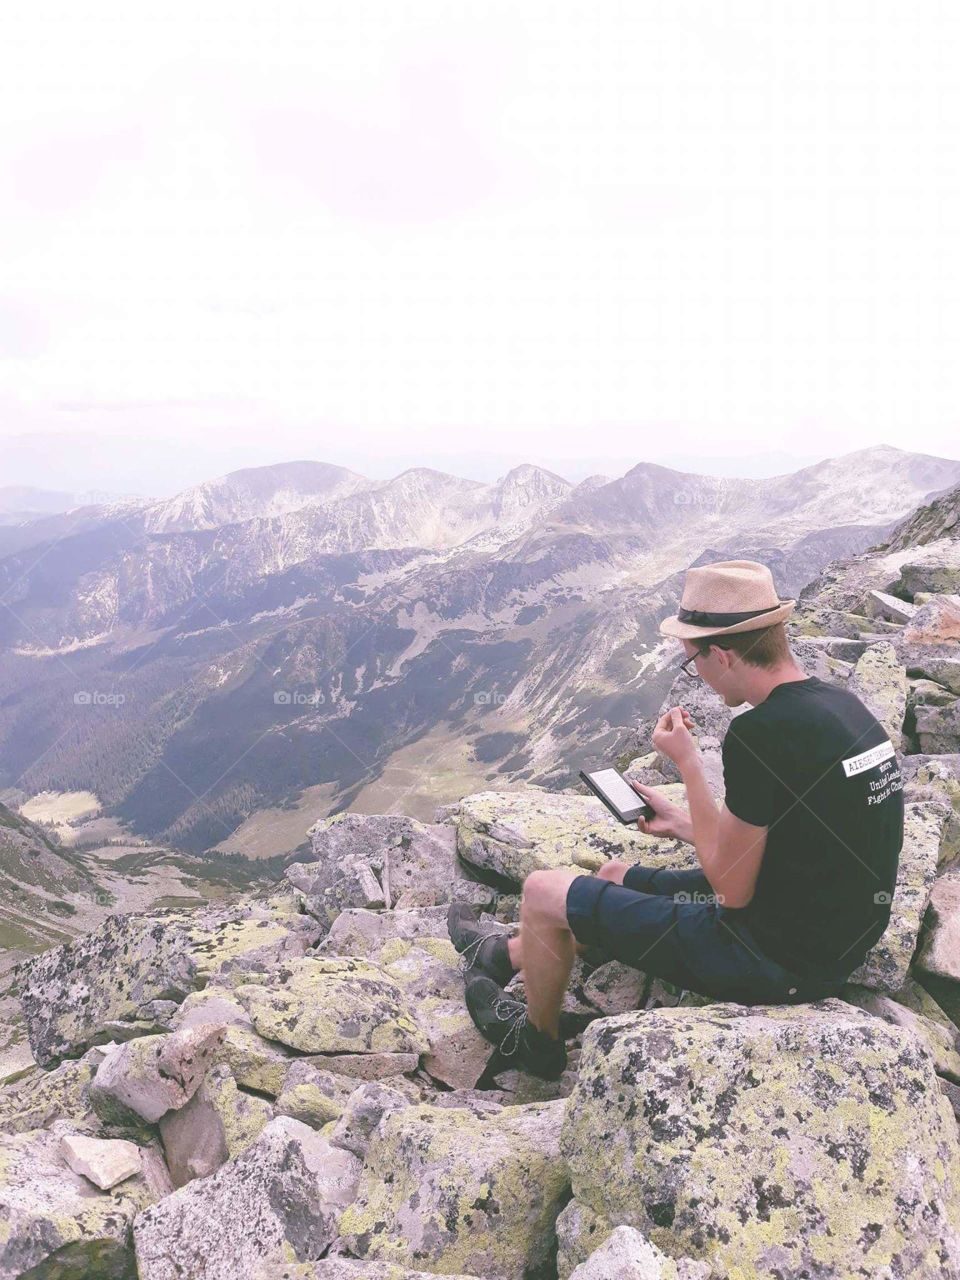 Reading to the mountains